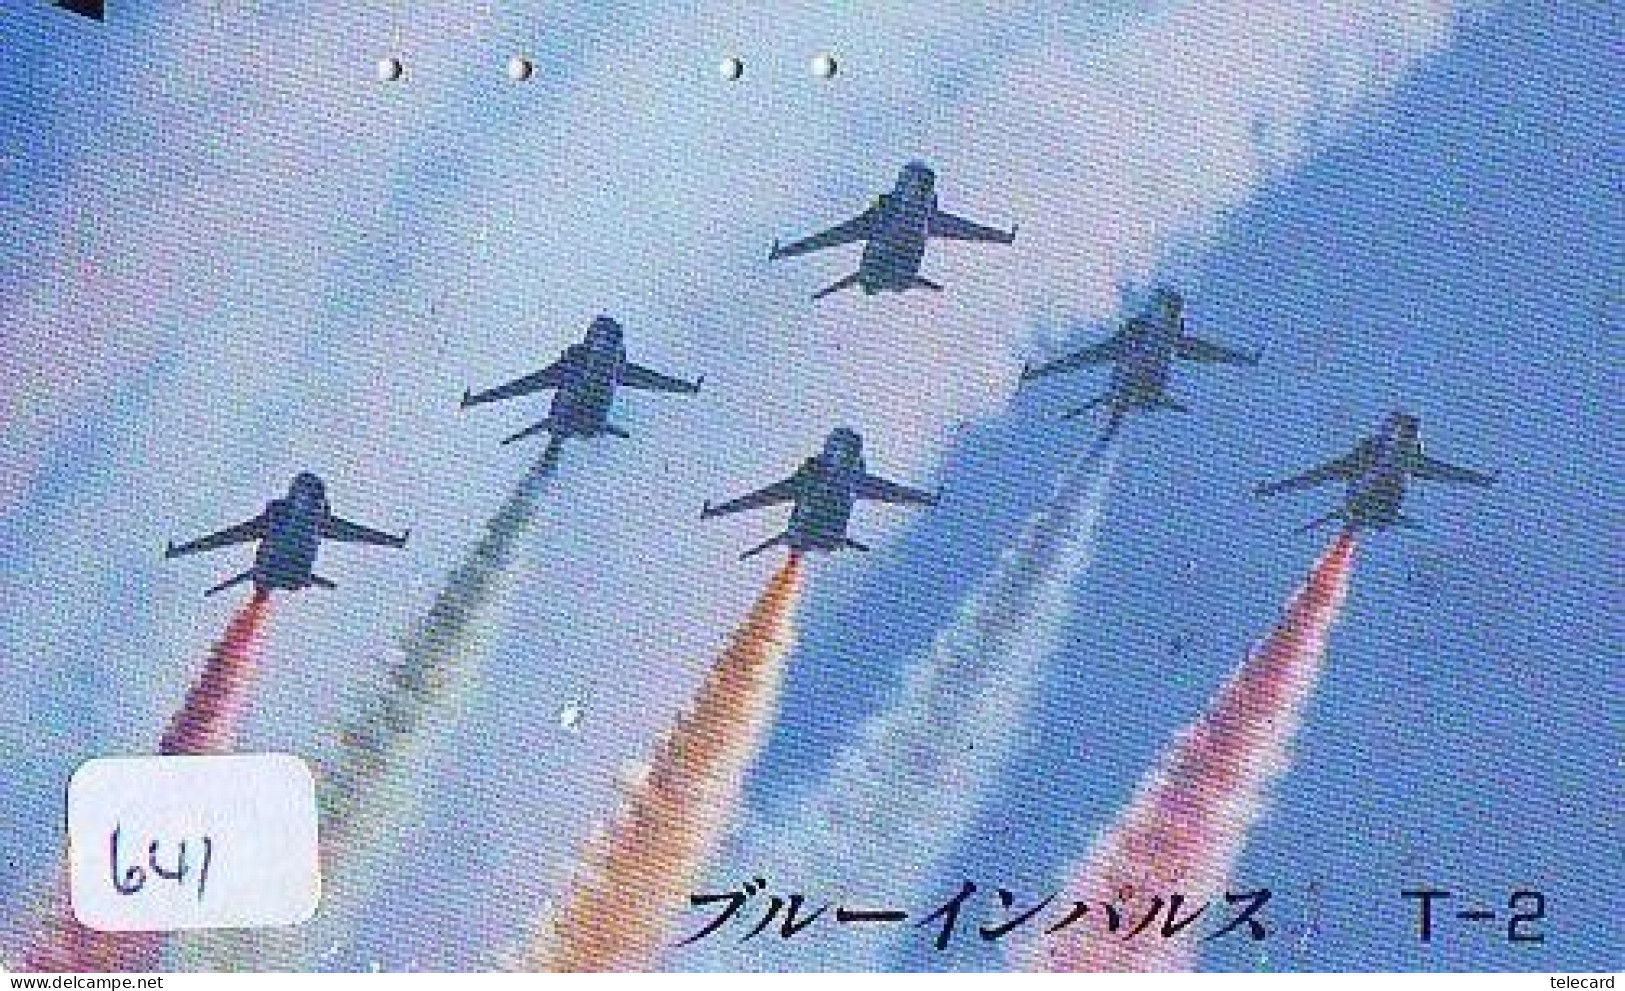 TELECARTE JAPON * MILITAIRY AVION  (641)  Flugzeuge * Airplane * Aeroplano * PHONECARD JAPAN * ARMEE * LEGER VLIEGTUIG - Armée